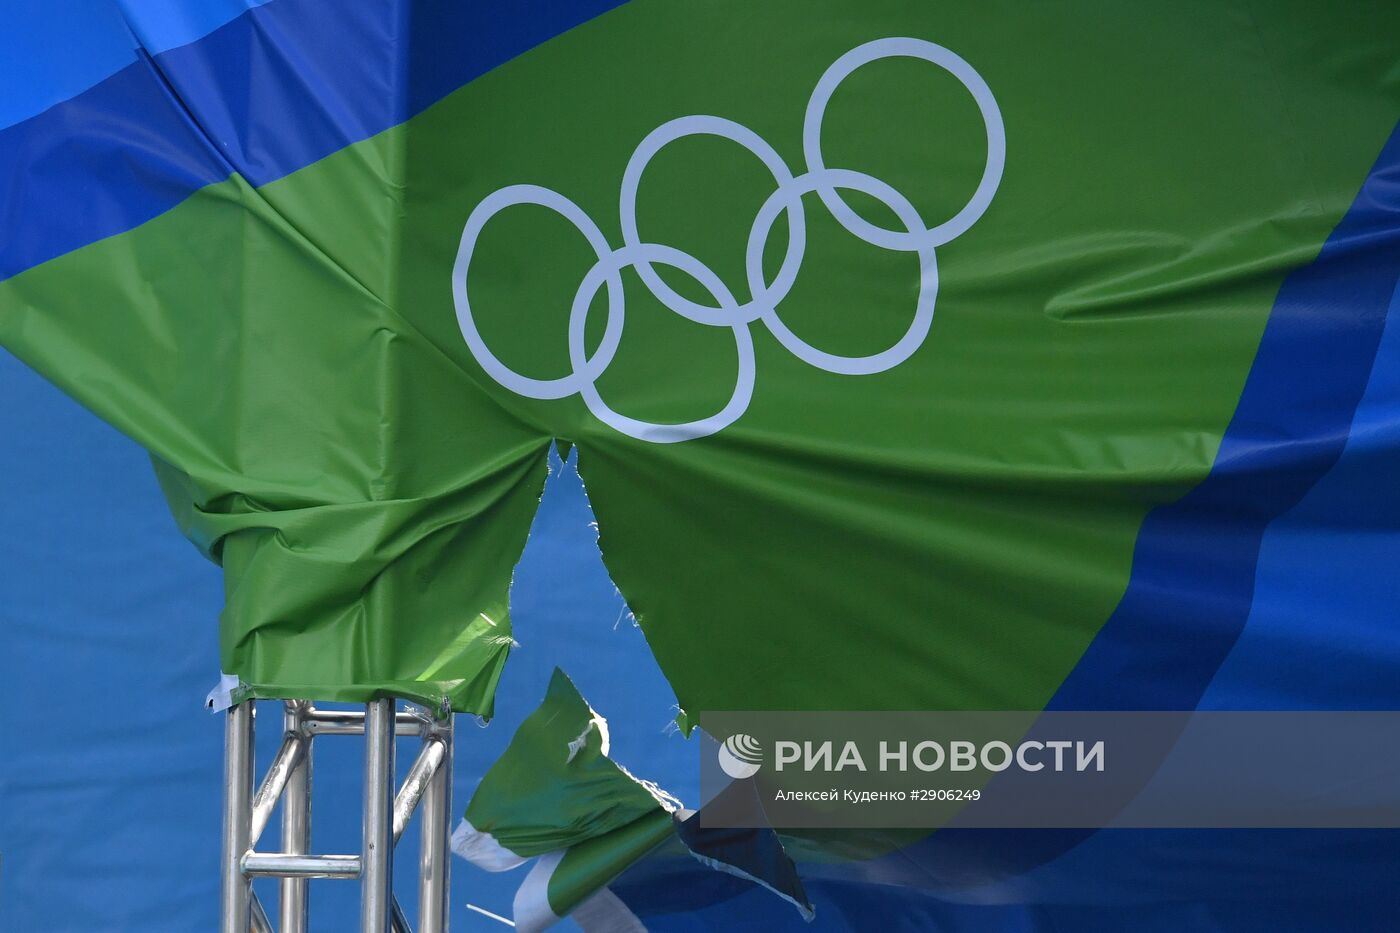 Баннер с символикой XXXI летних Олимпийских игр